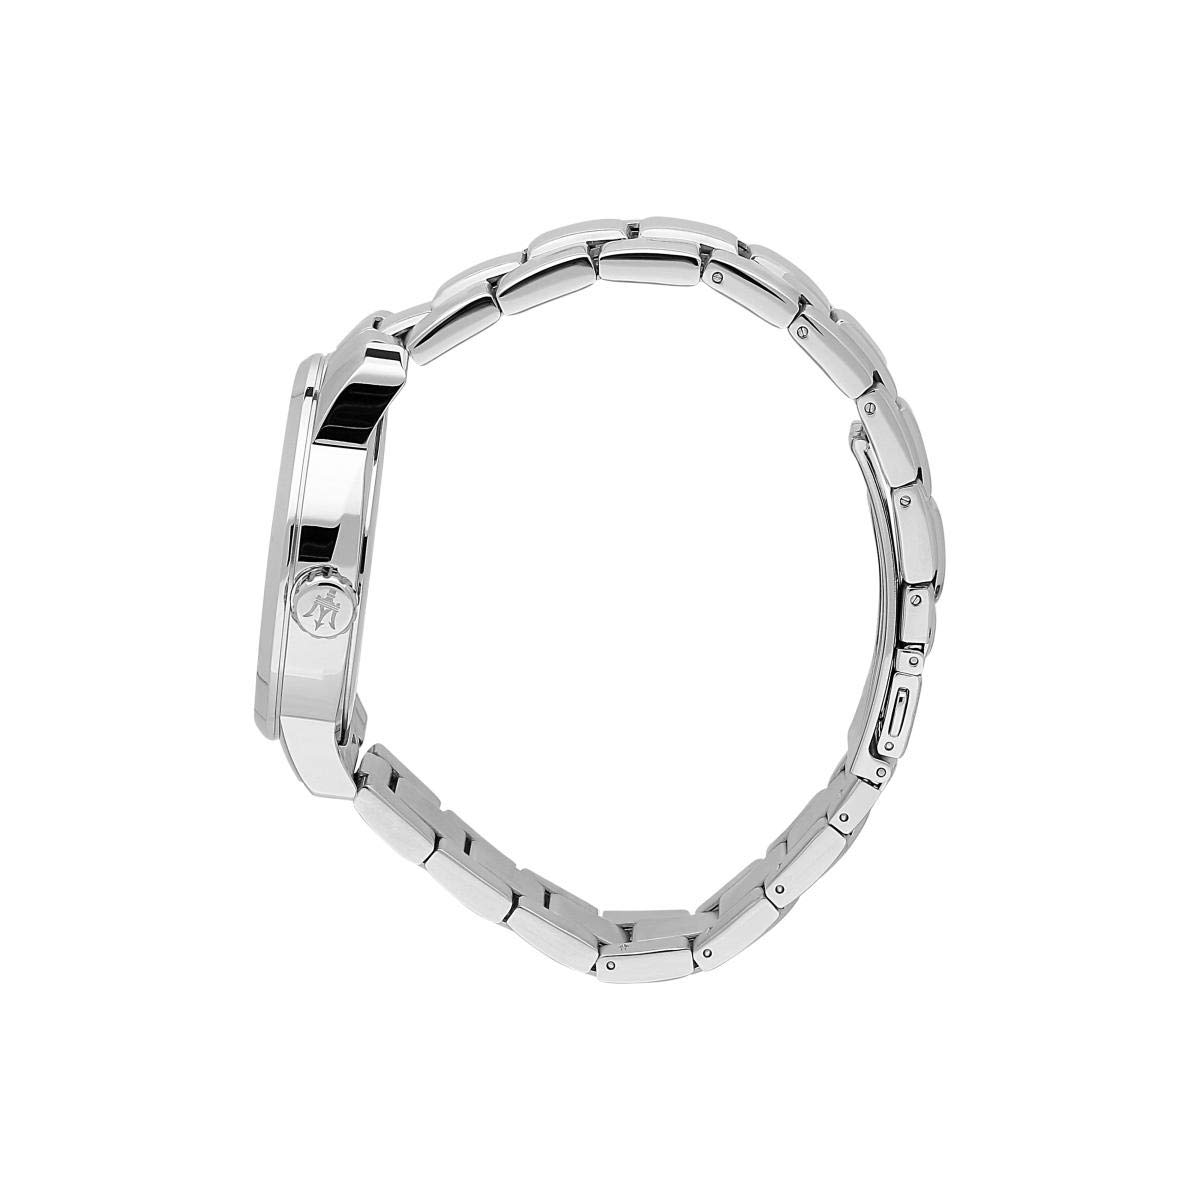 Maserati Men's R8853121004 SUCCESSO  Analog Display Quartz Silver Watch